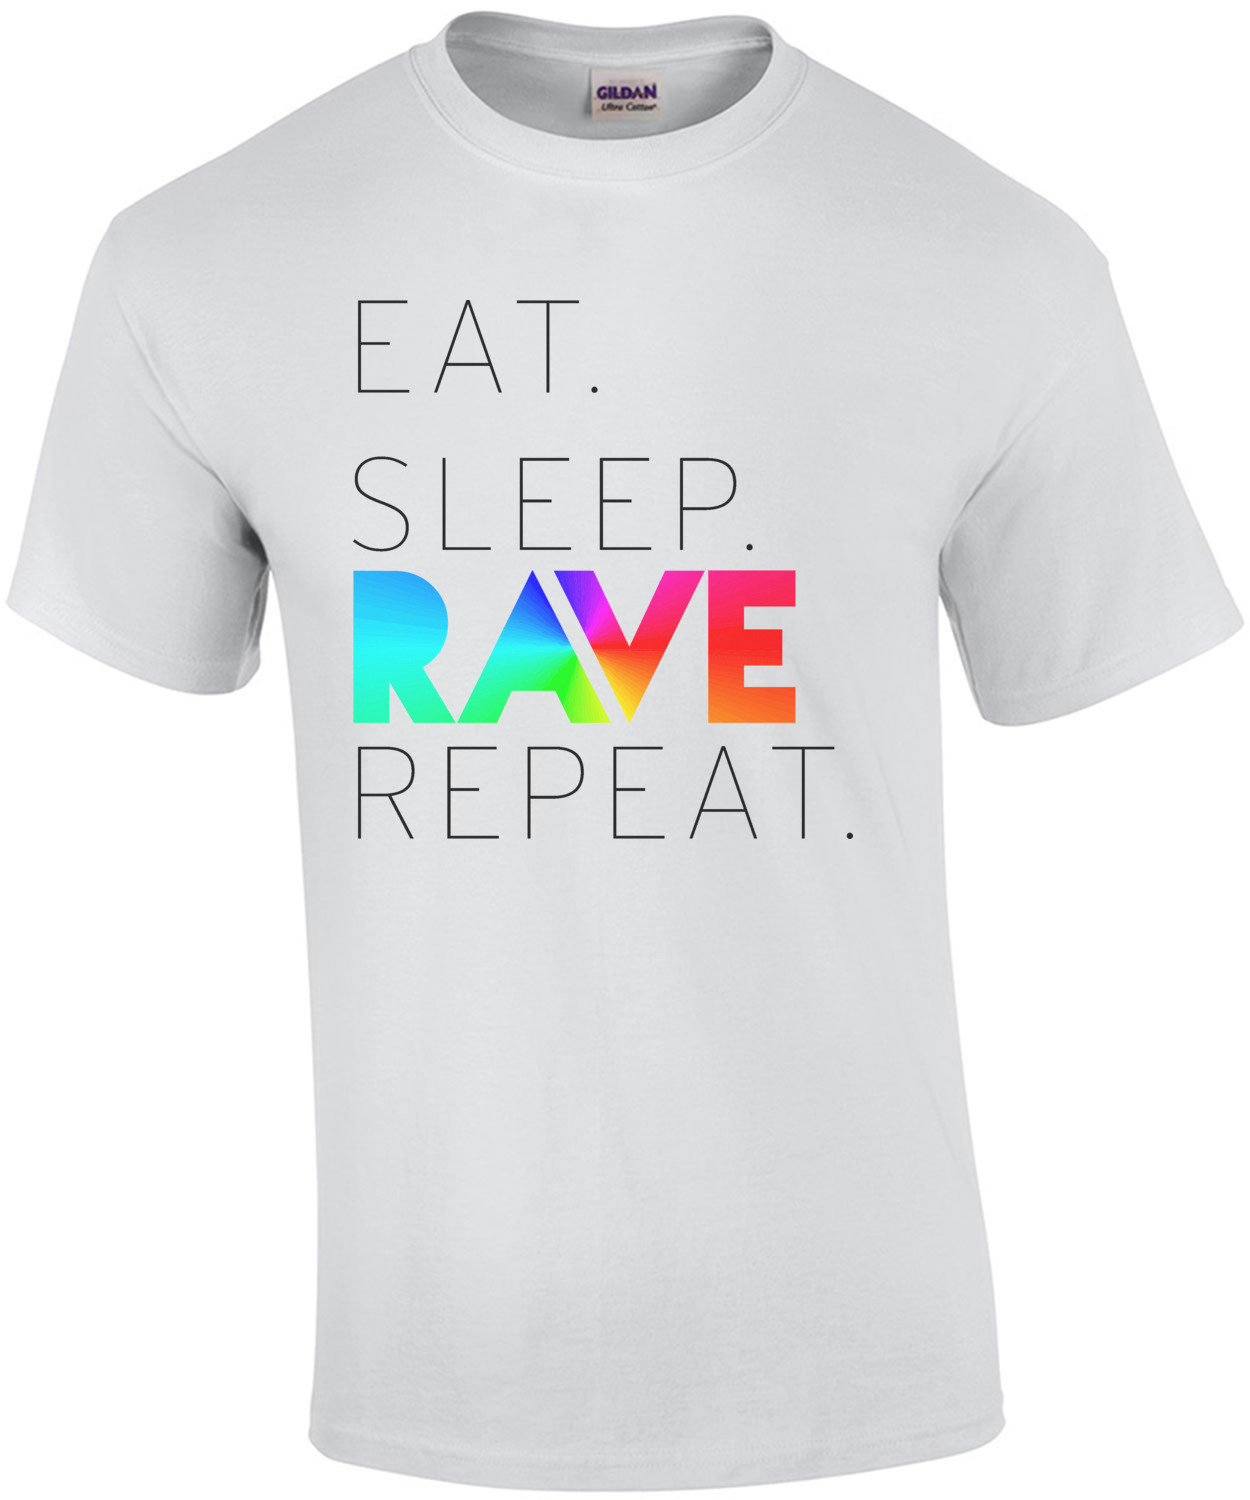 Eat. Sleep. Rave. Repeat. Funny